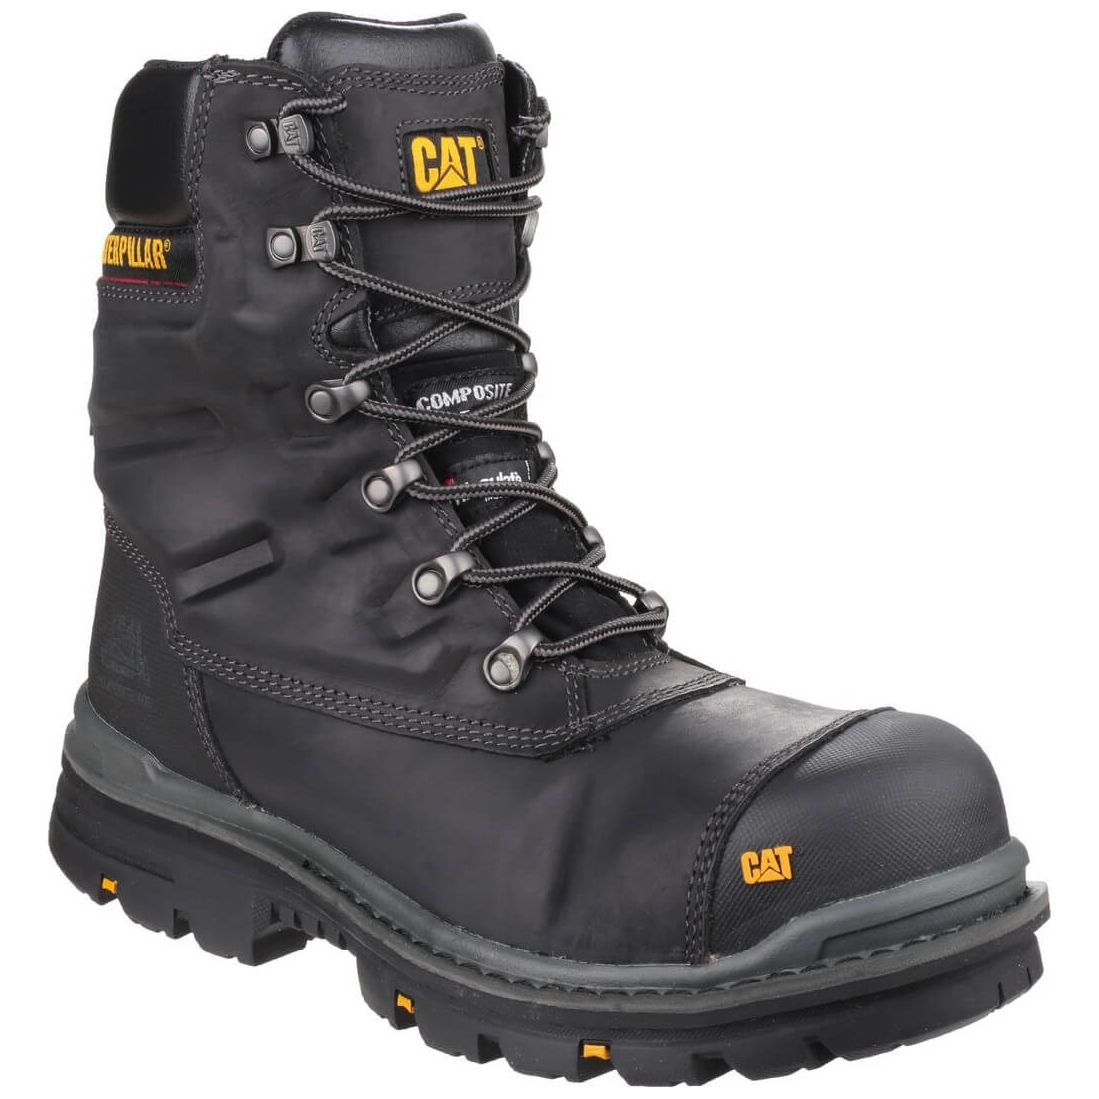 Caterpillar Premier Waterproof Safety Boots - Mens - Sale